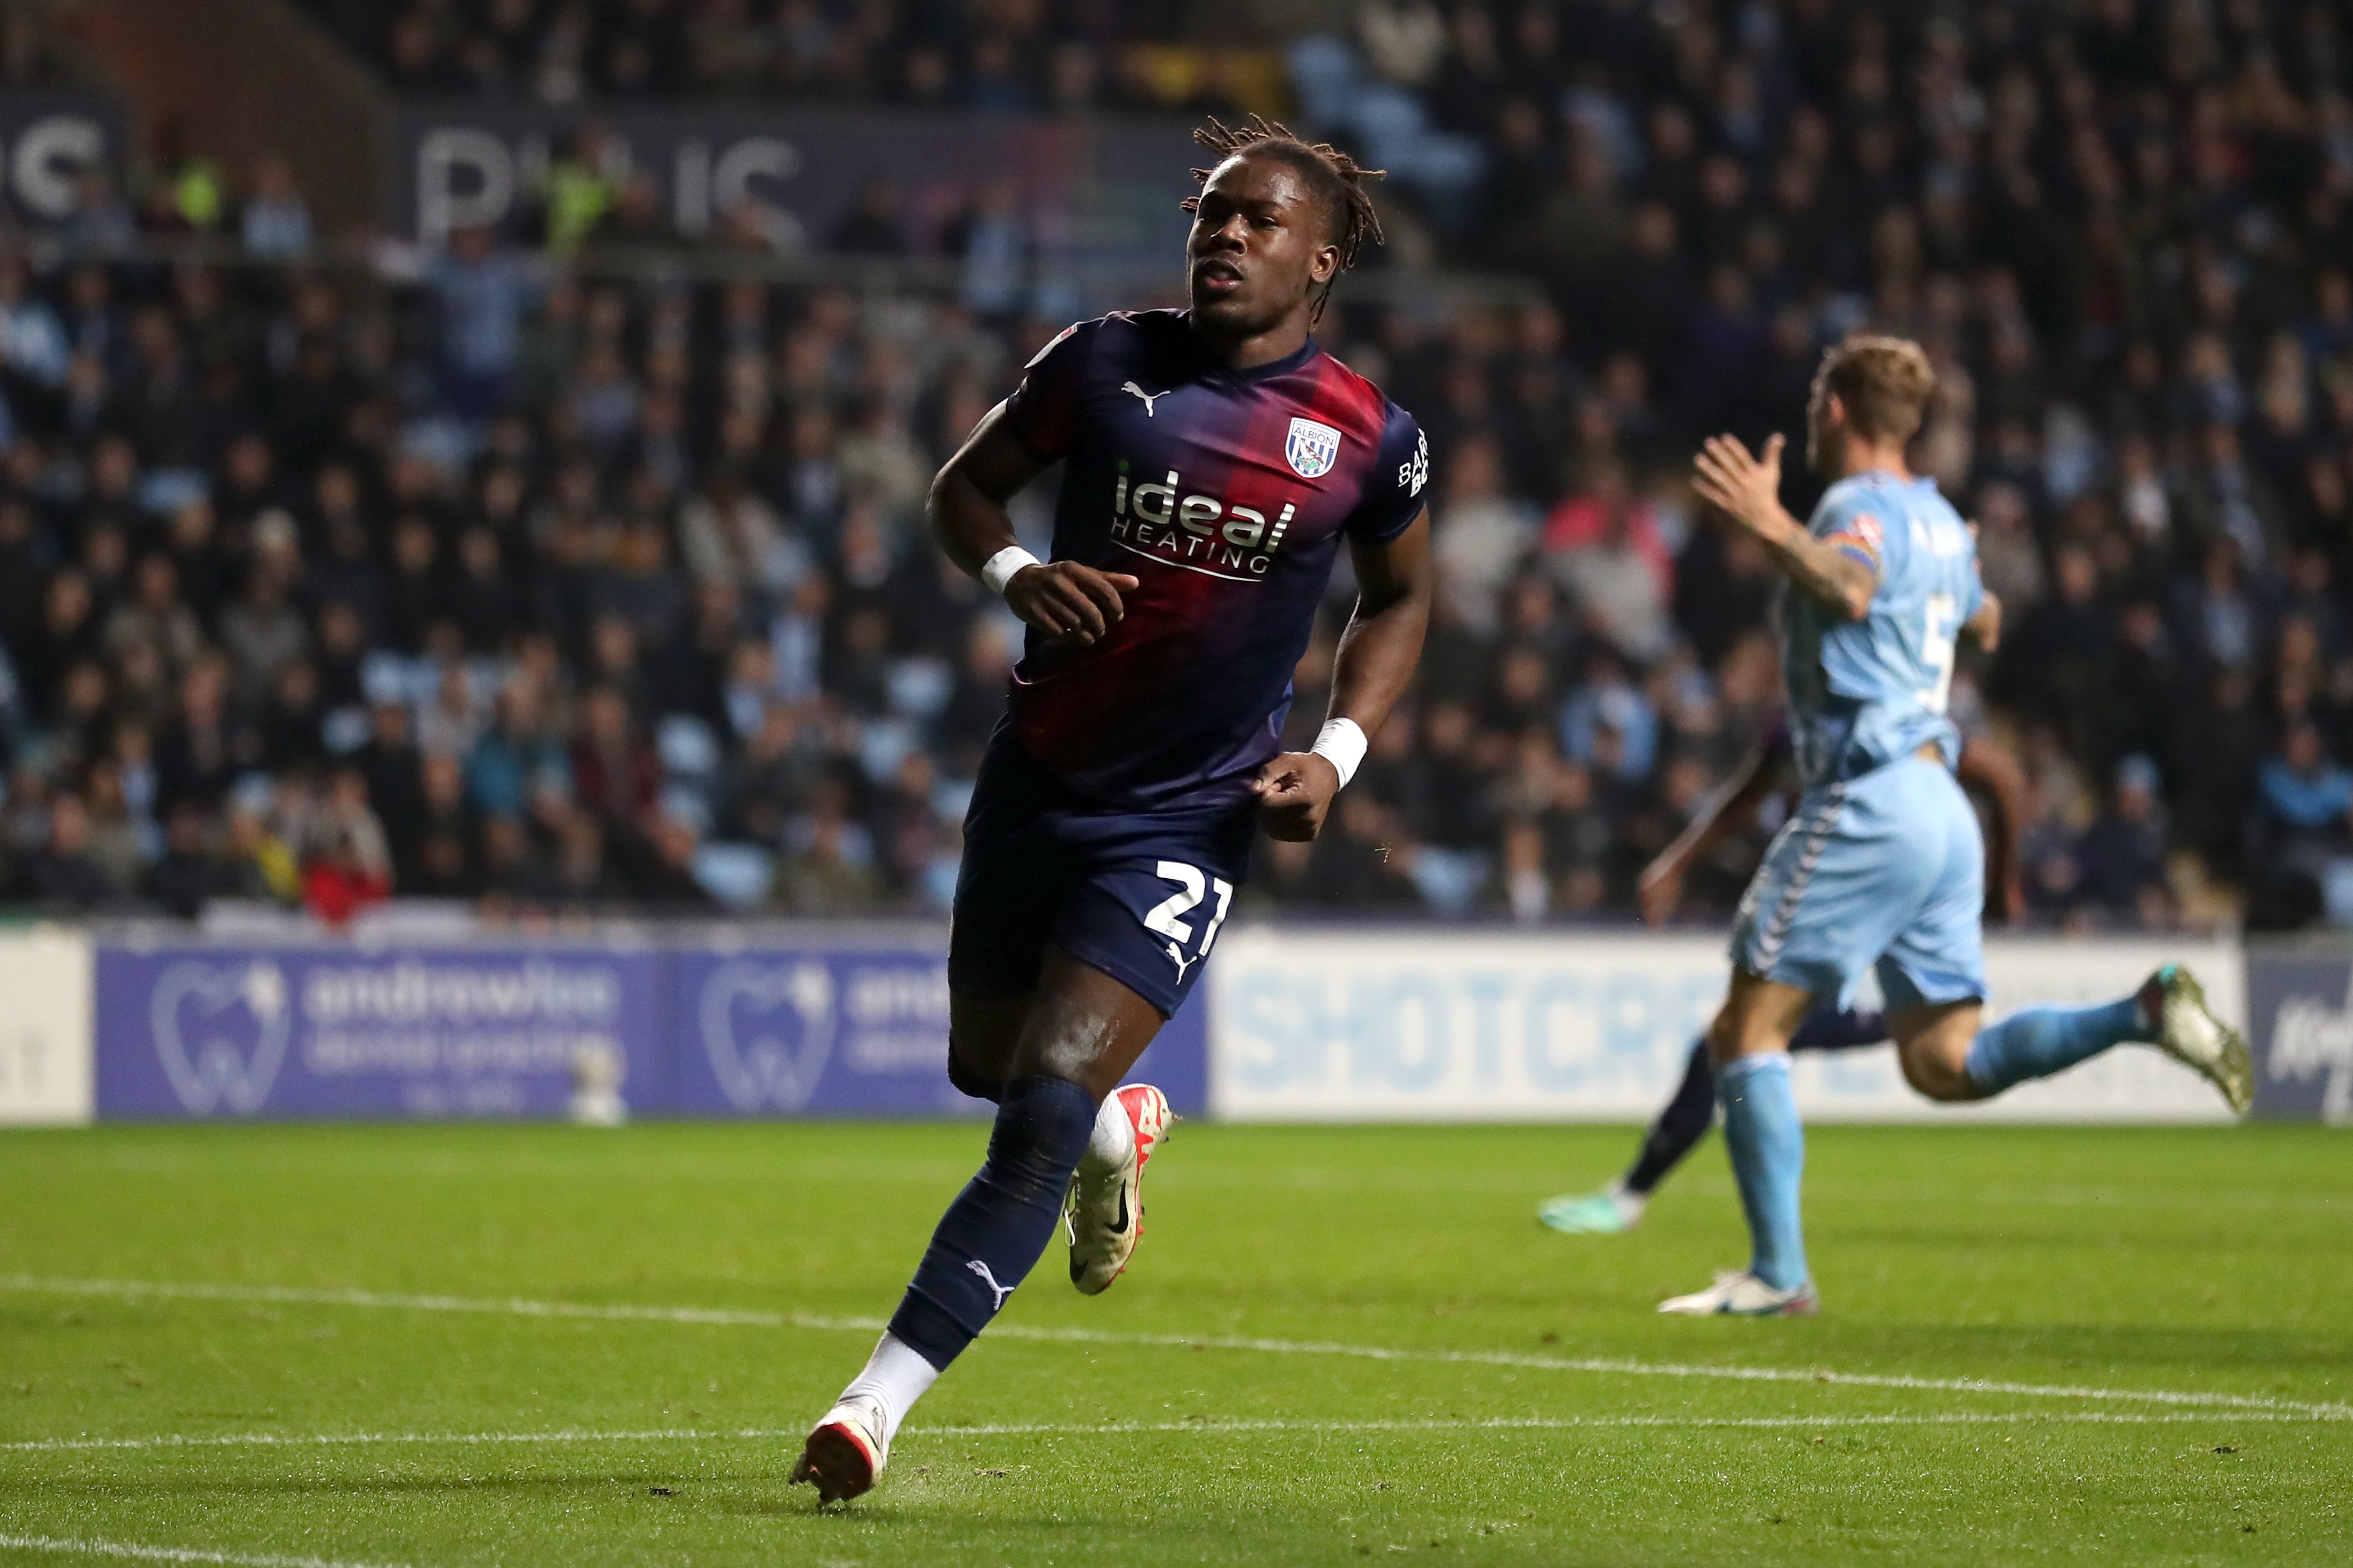 Brandon Thomas-Asante celebrates scoring against Coventry City